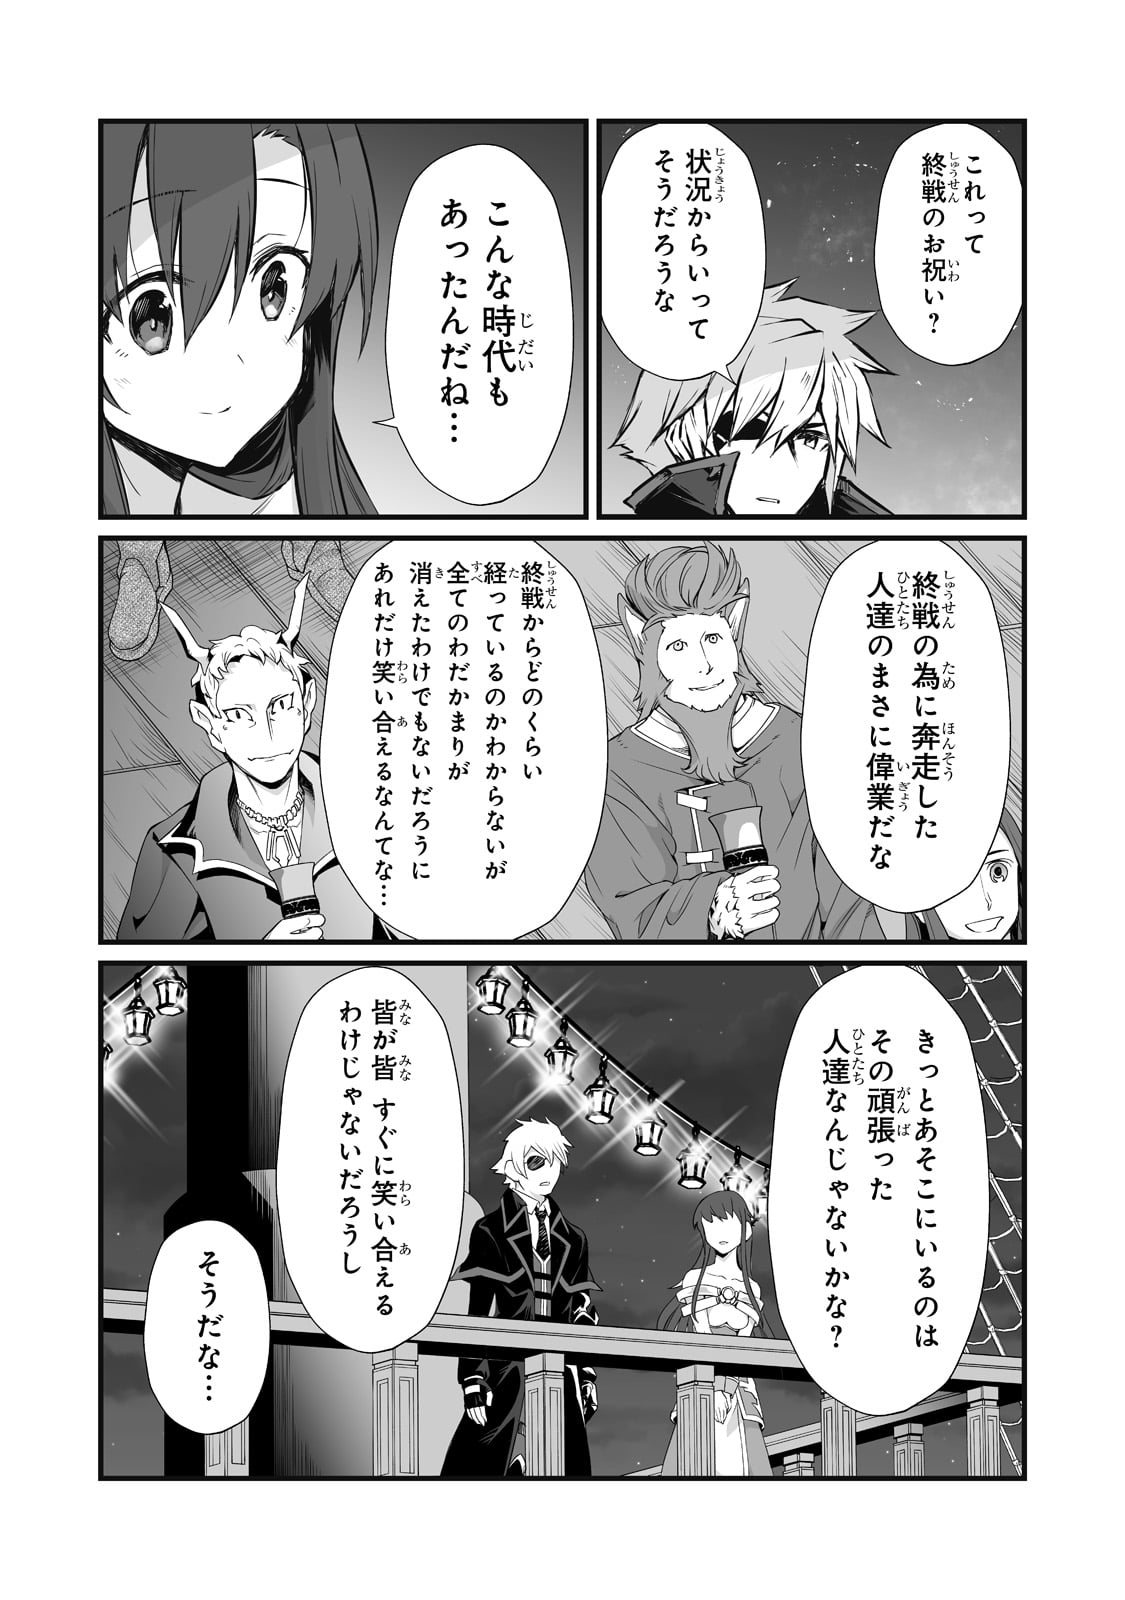 Read Arifureta Shokugyou De Sekai Saikyou Chapter 62: Party on Mangakakalot